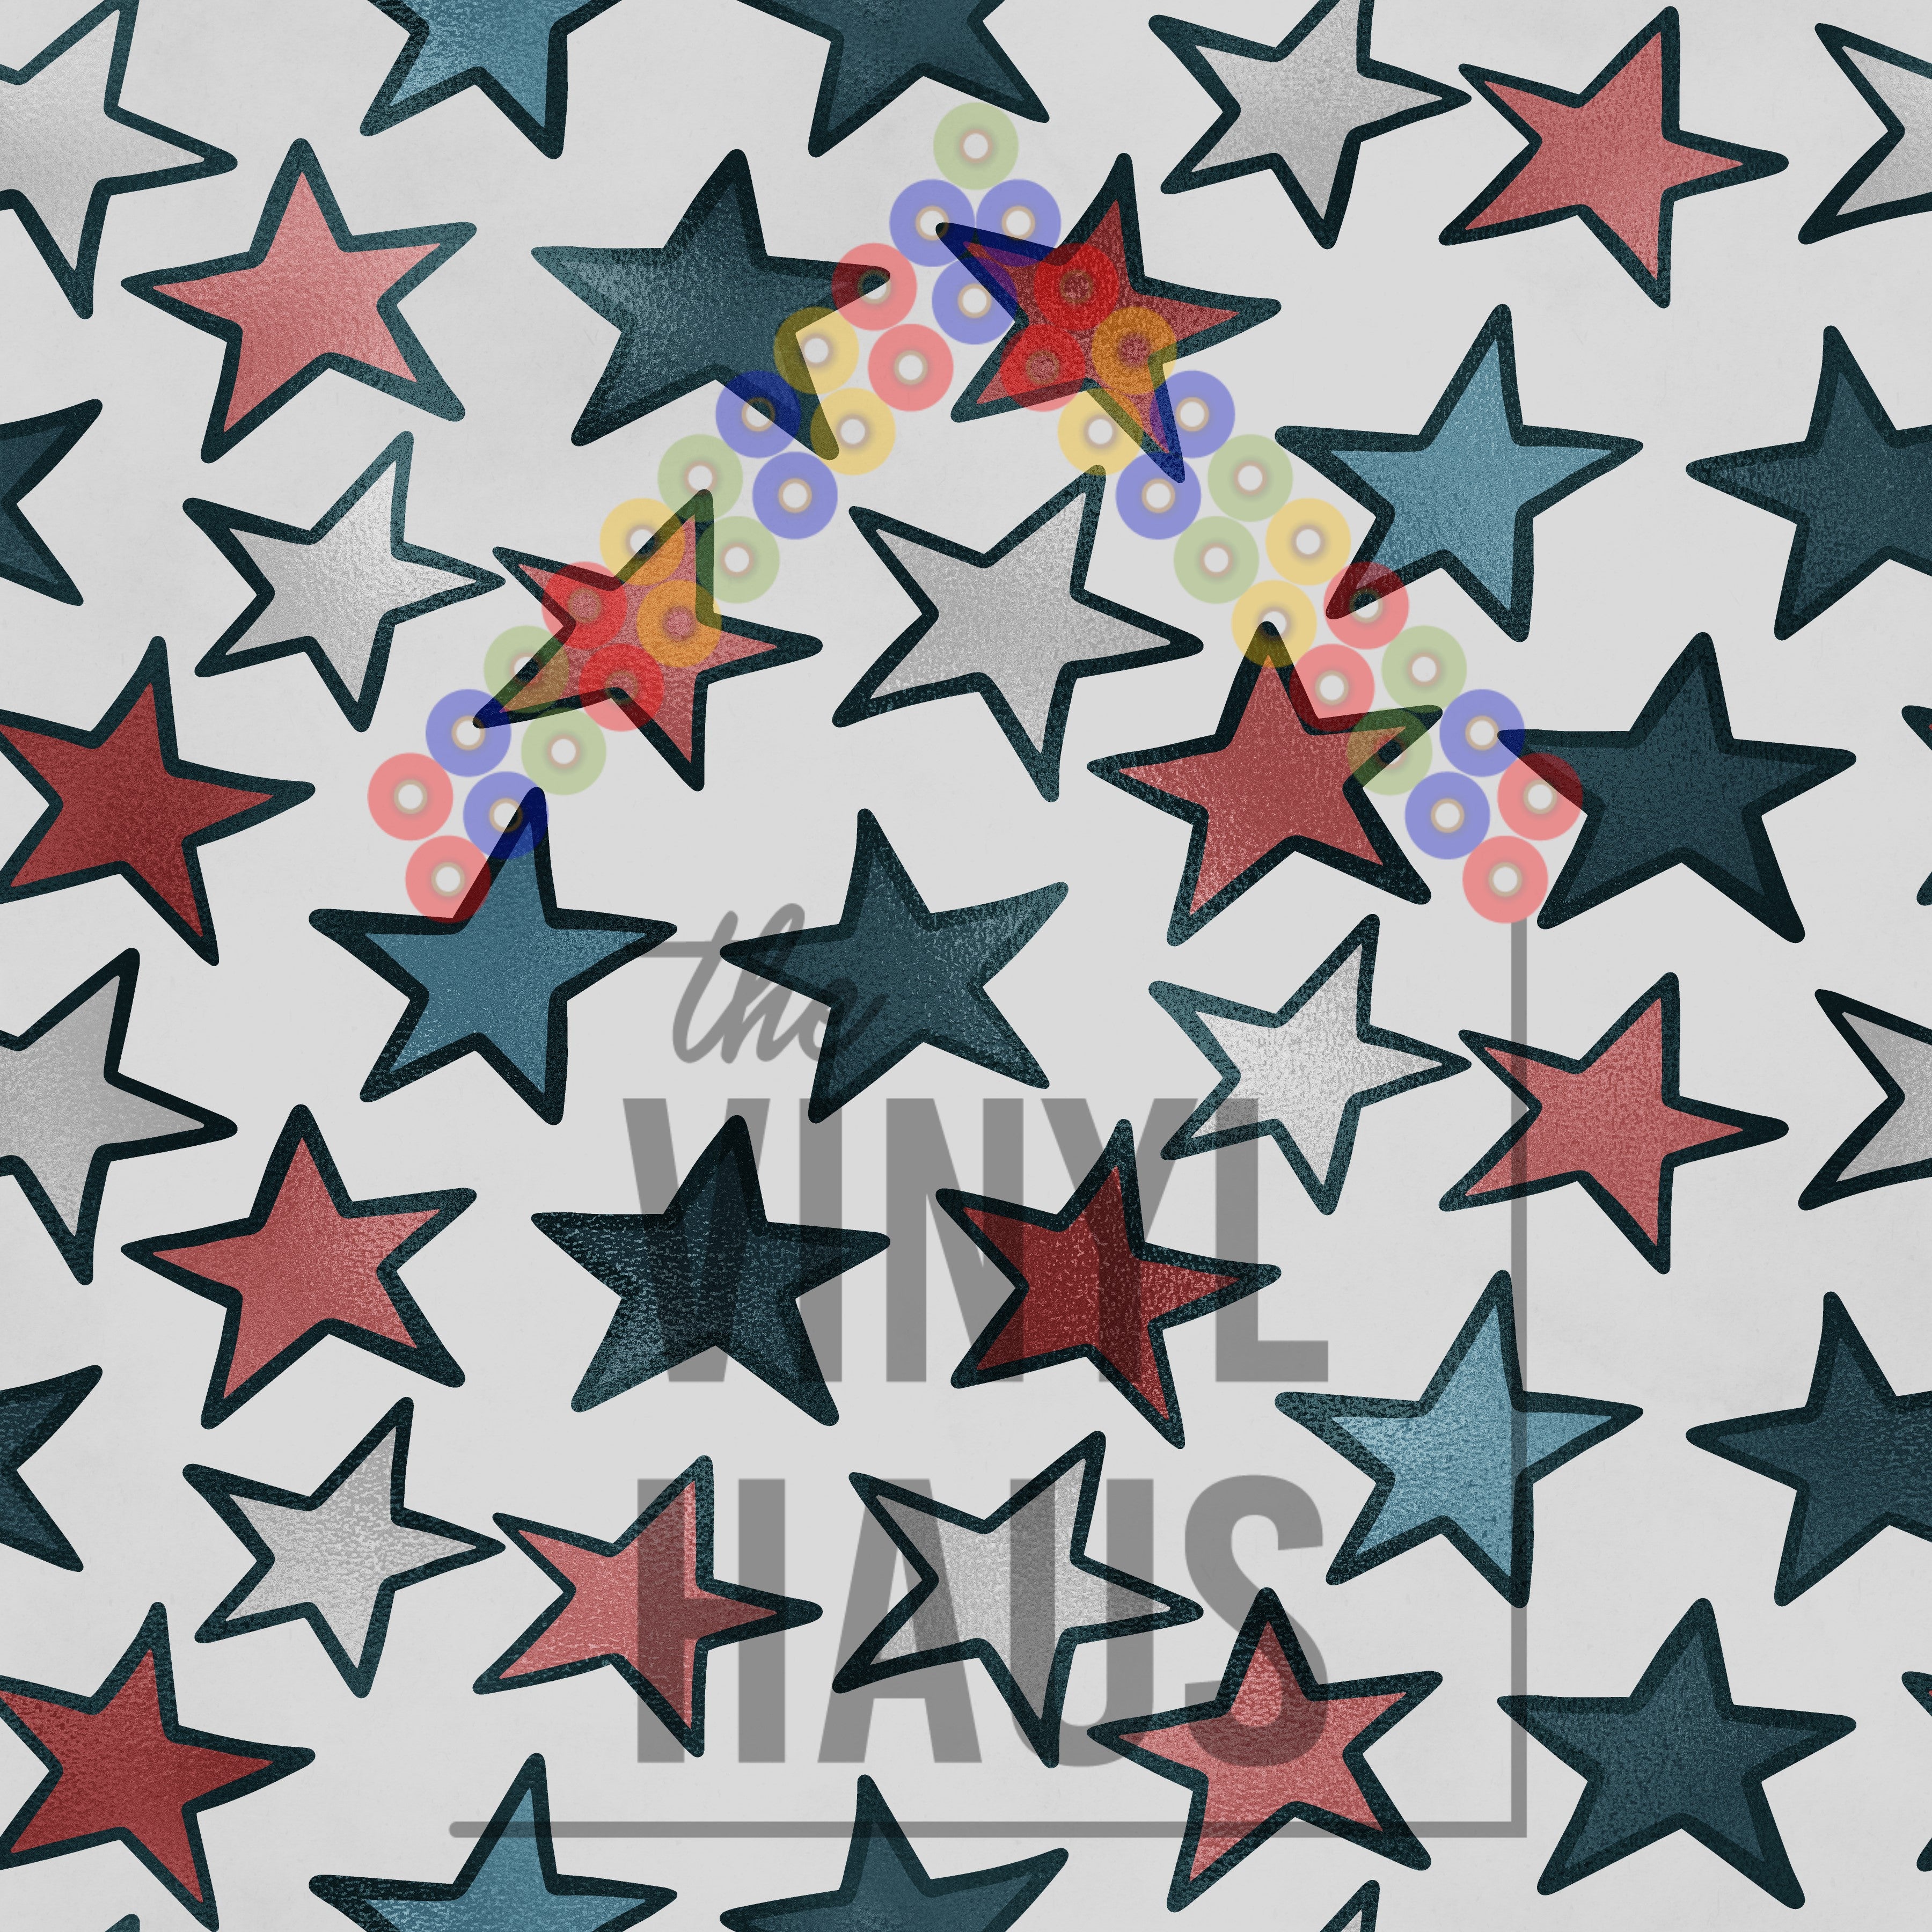 4th of July Stars Pattern Vinyl 12" x 12" - The Vinyl Haus